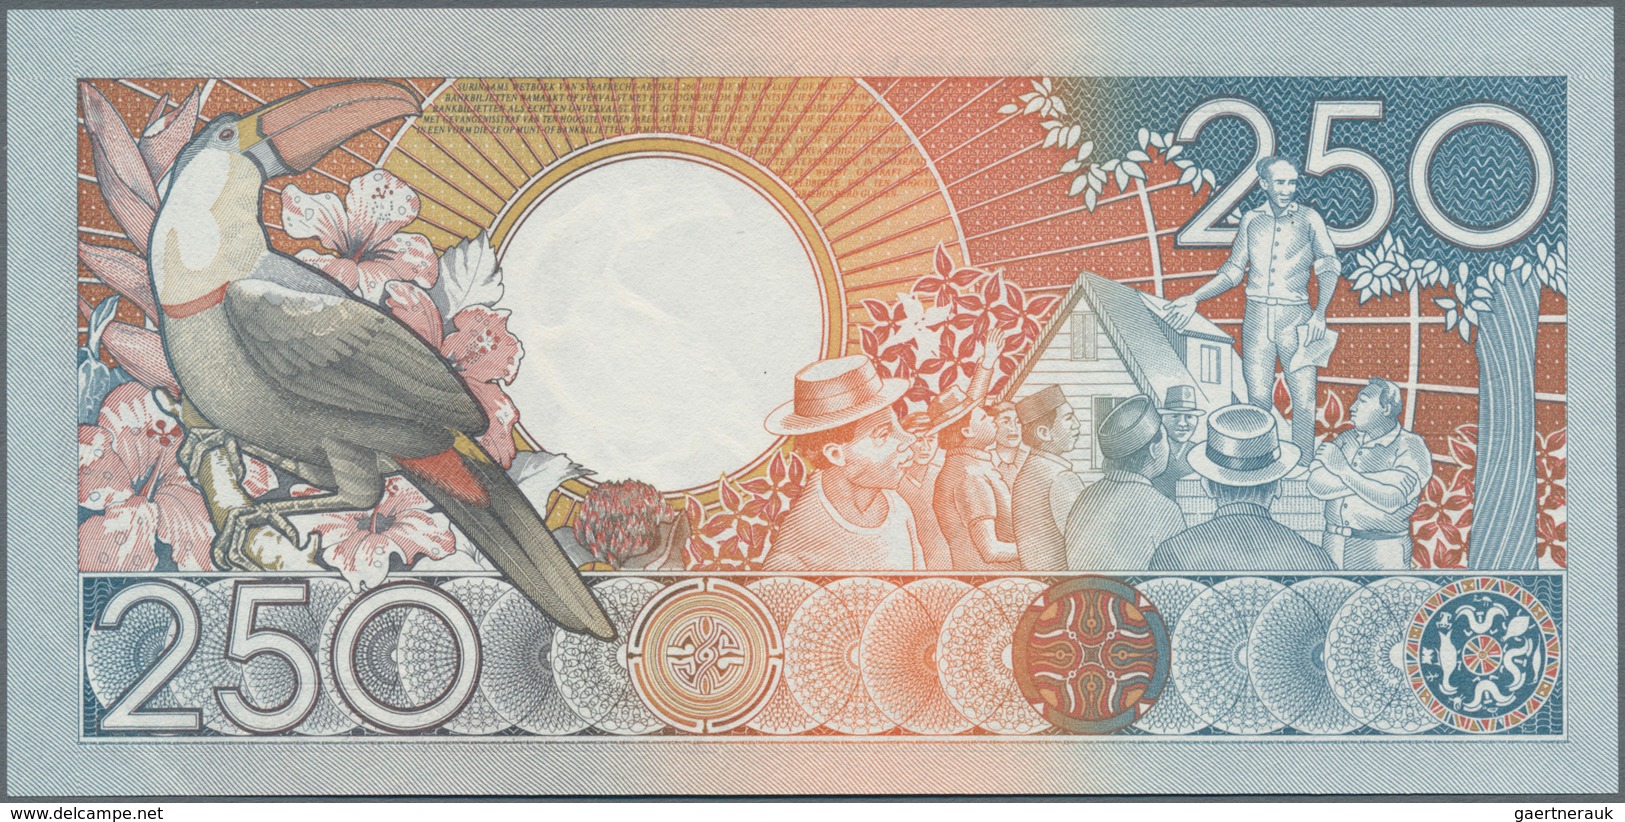 Suriname: Centrale Bank van Suriname nice lot with 13 banknotes, comprising 2x 1 Gulden 1963 (F), 4x